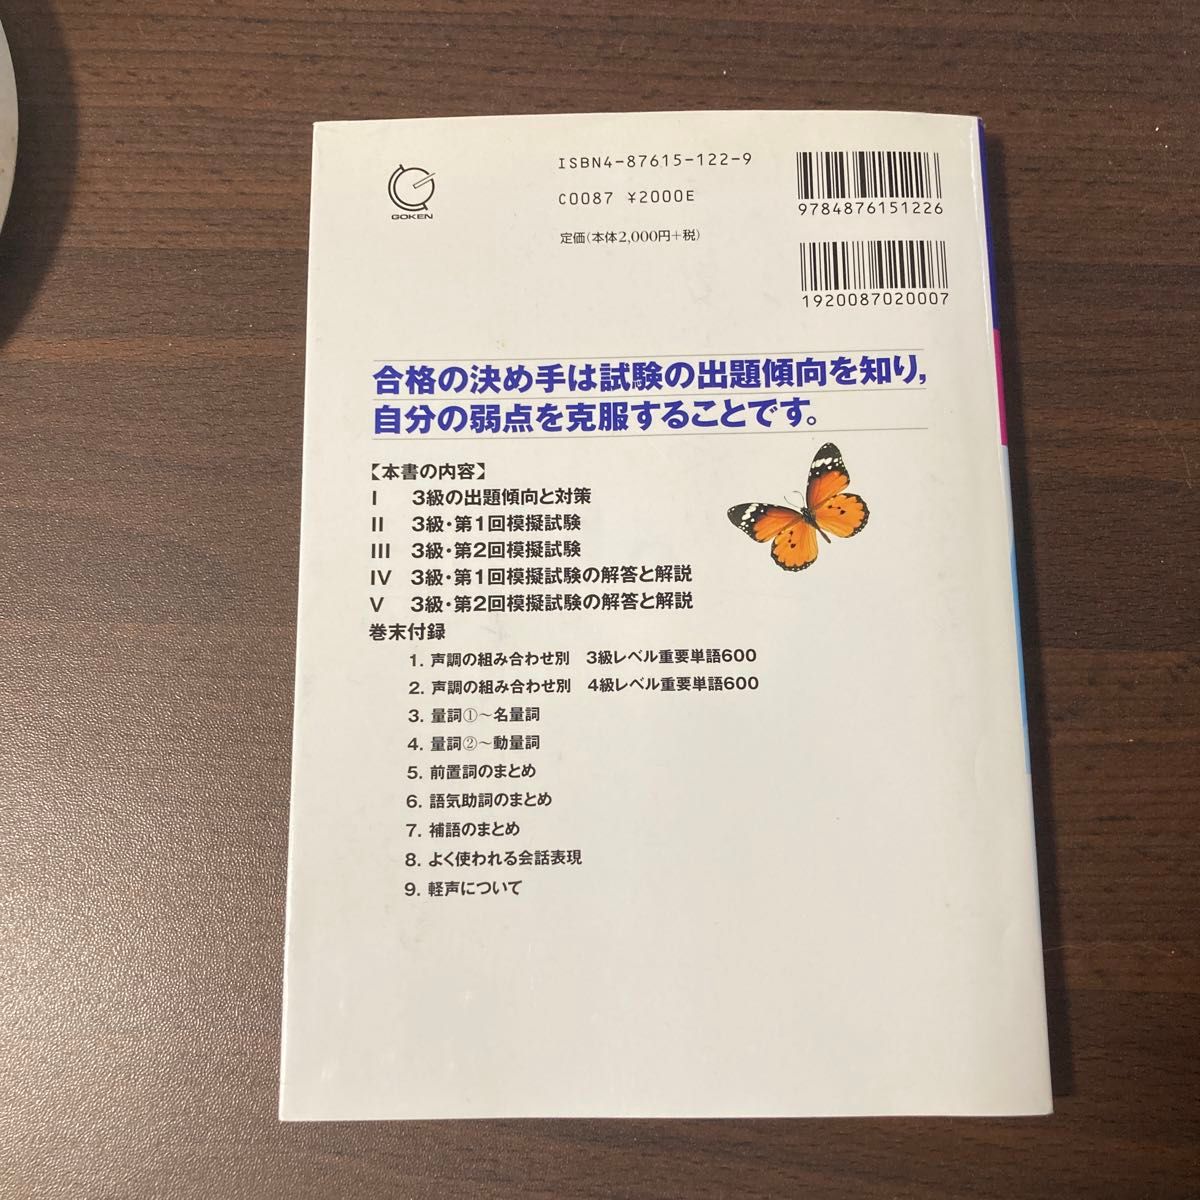 CDブック 中国語検定3級合格ガイドと直/永倉百合子/胡興智